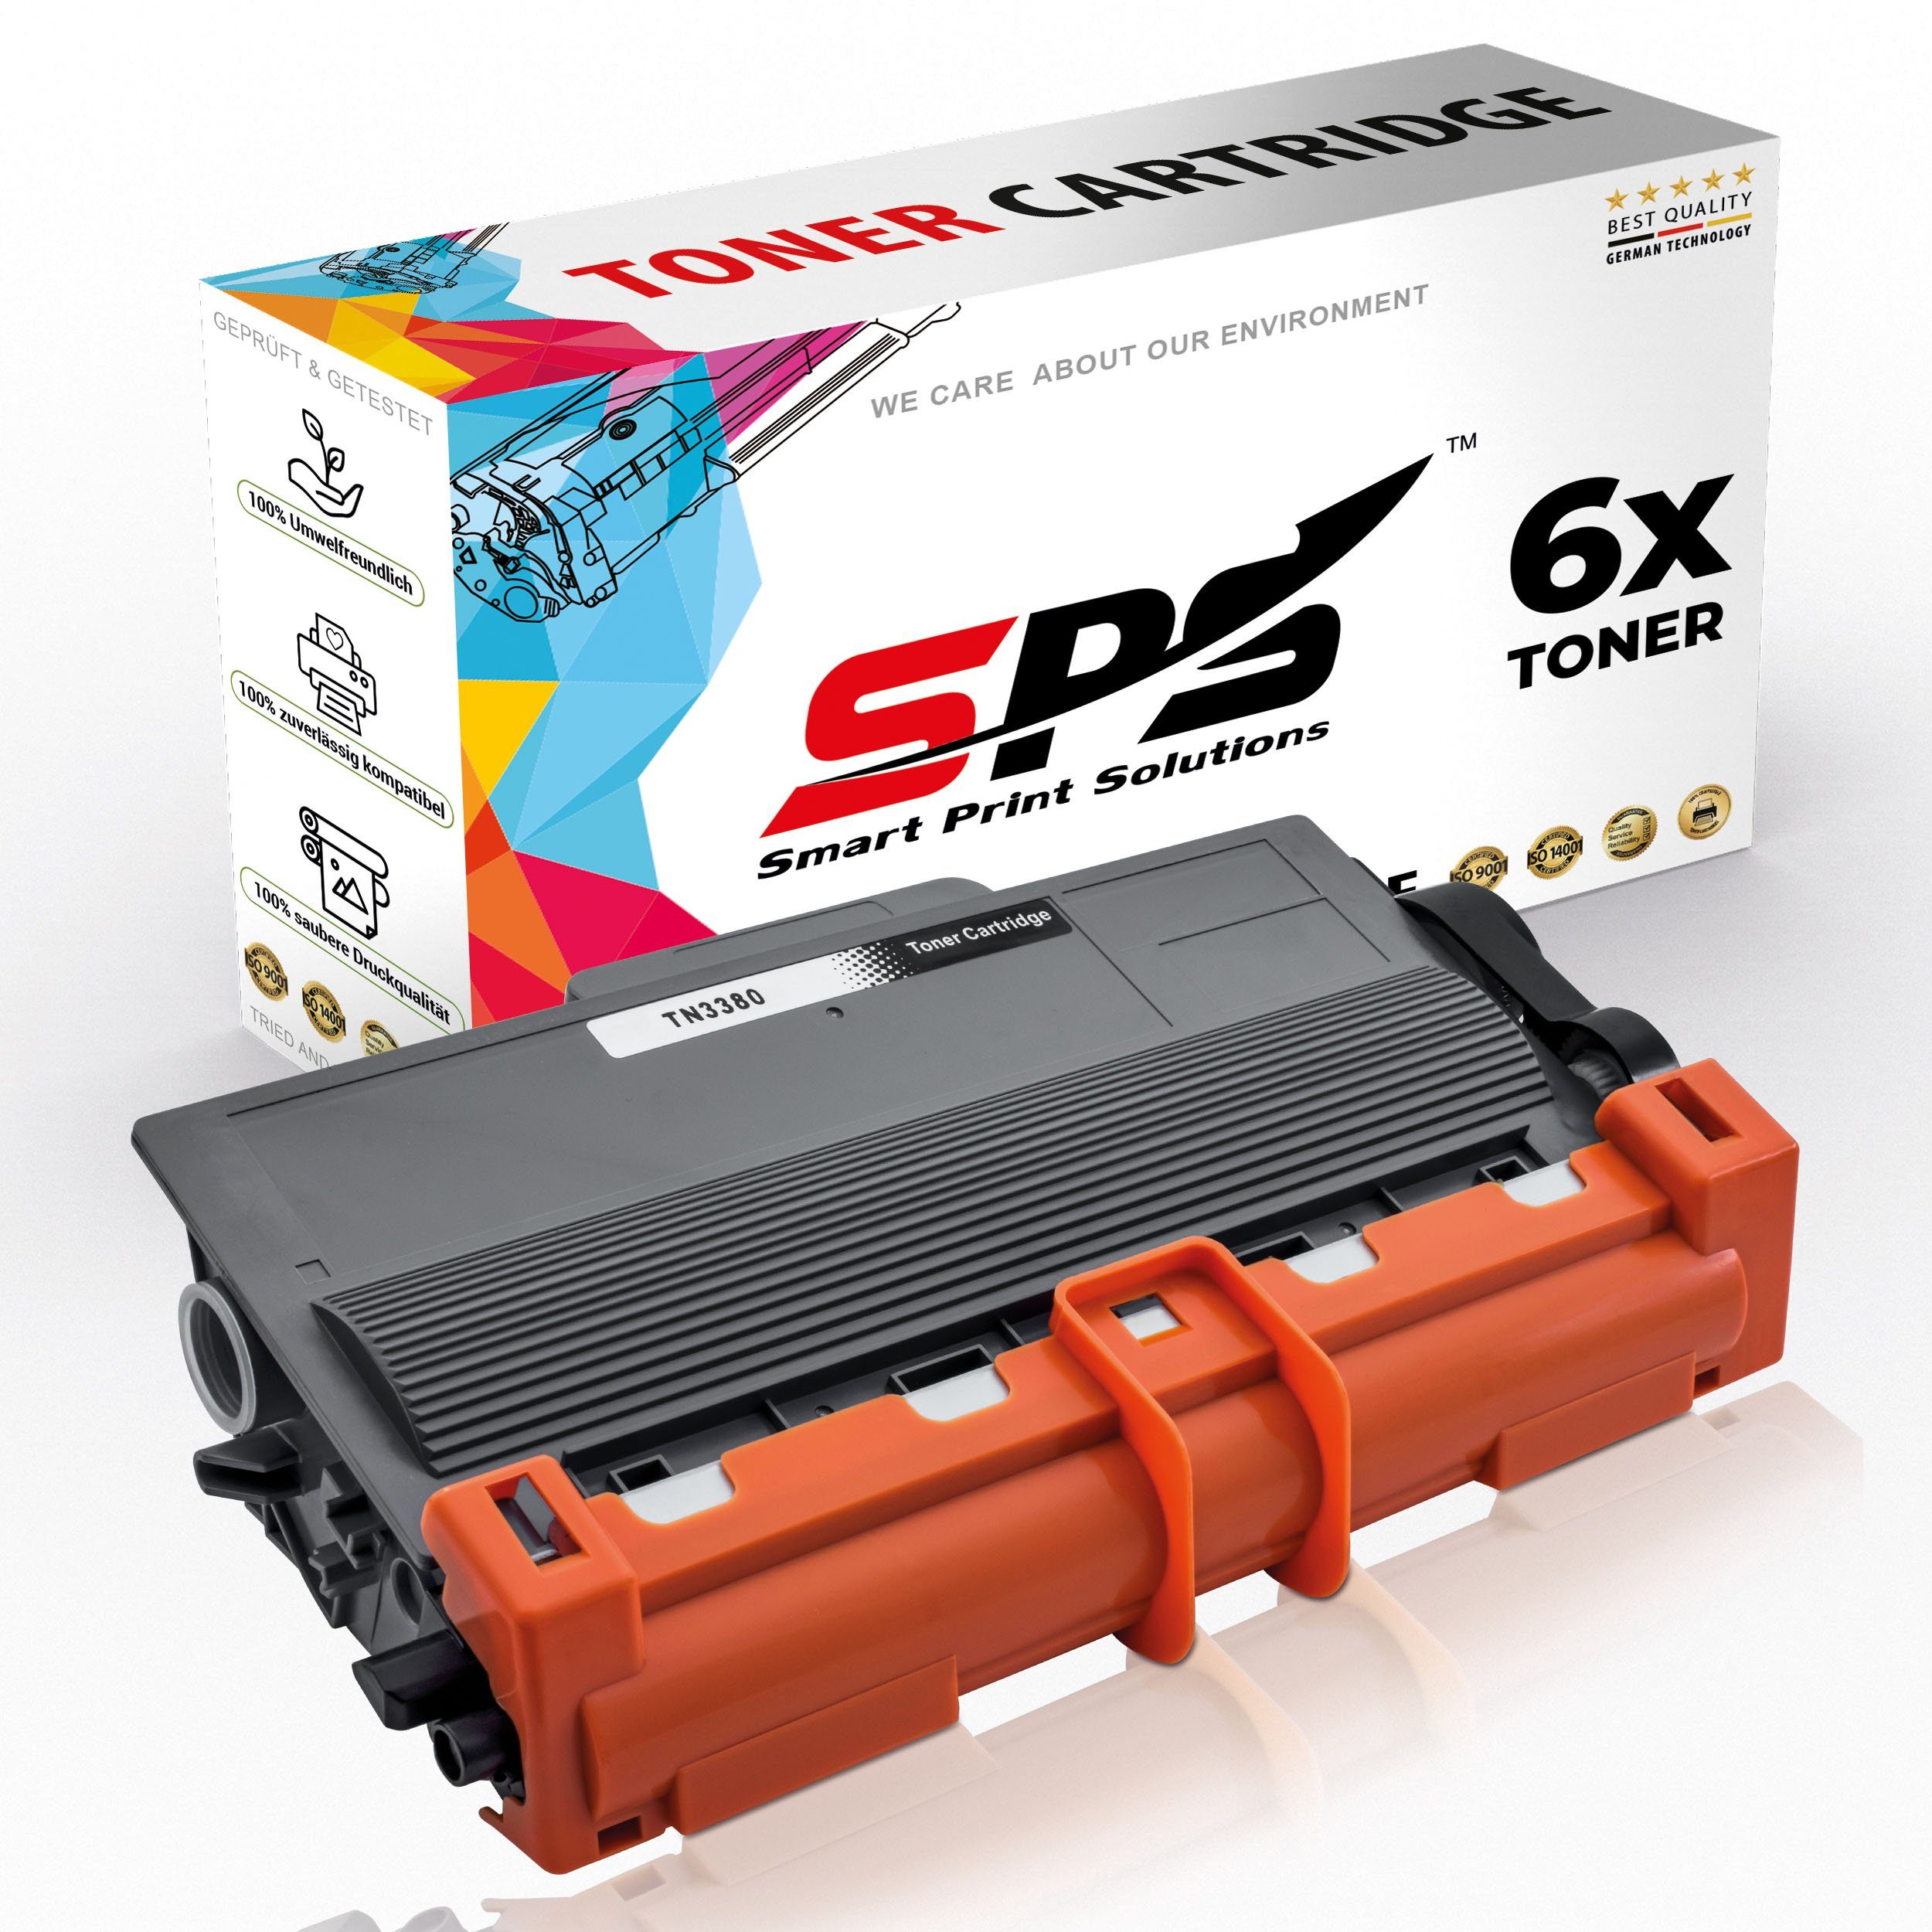 SPS Tonerkartusche Kompatibel für Brother DCP-8010DN TN-3380, (6er Pack) | Tonerpatronen